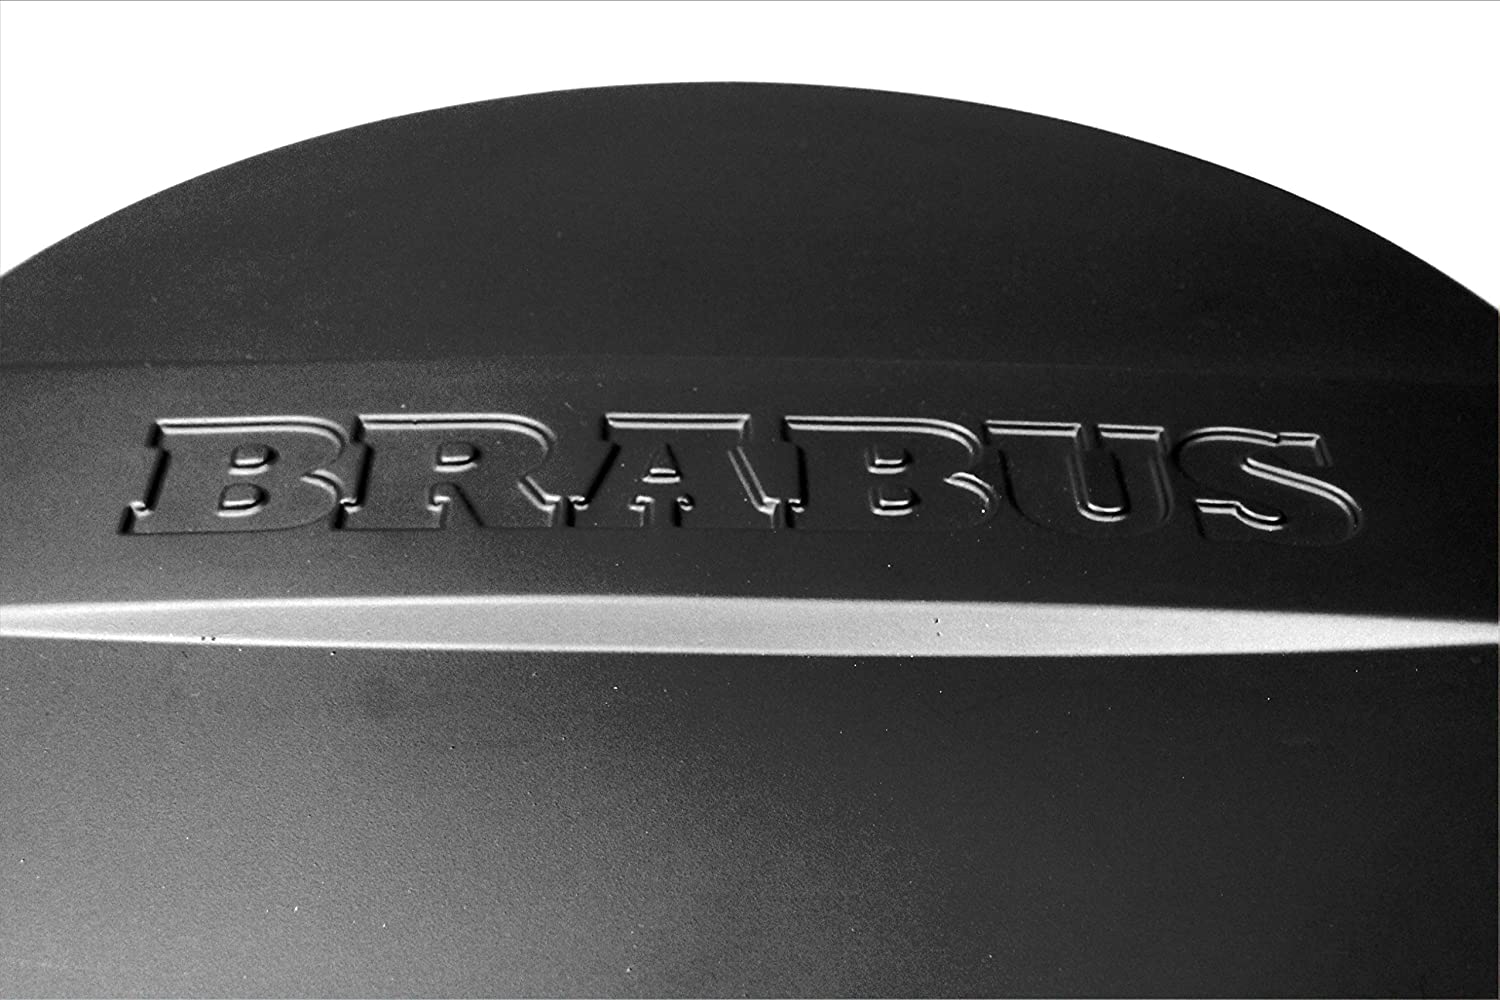 Fiberglass Brabus rear spare wheel cover plate for Mercedes-Benz W463 W463a W464 G-Class G-Wagon